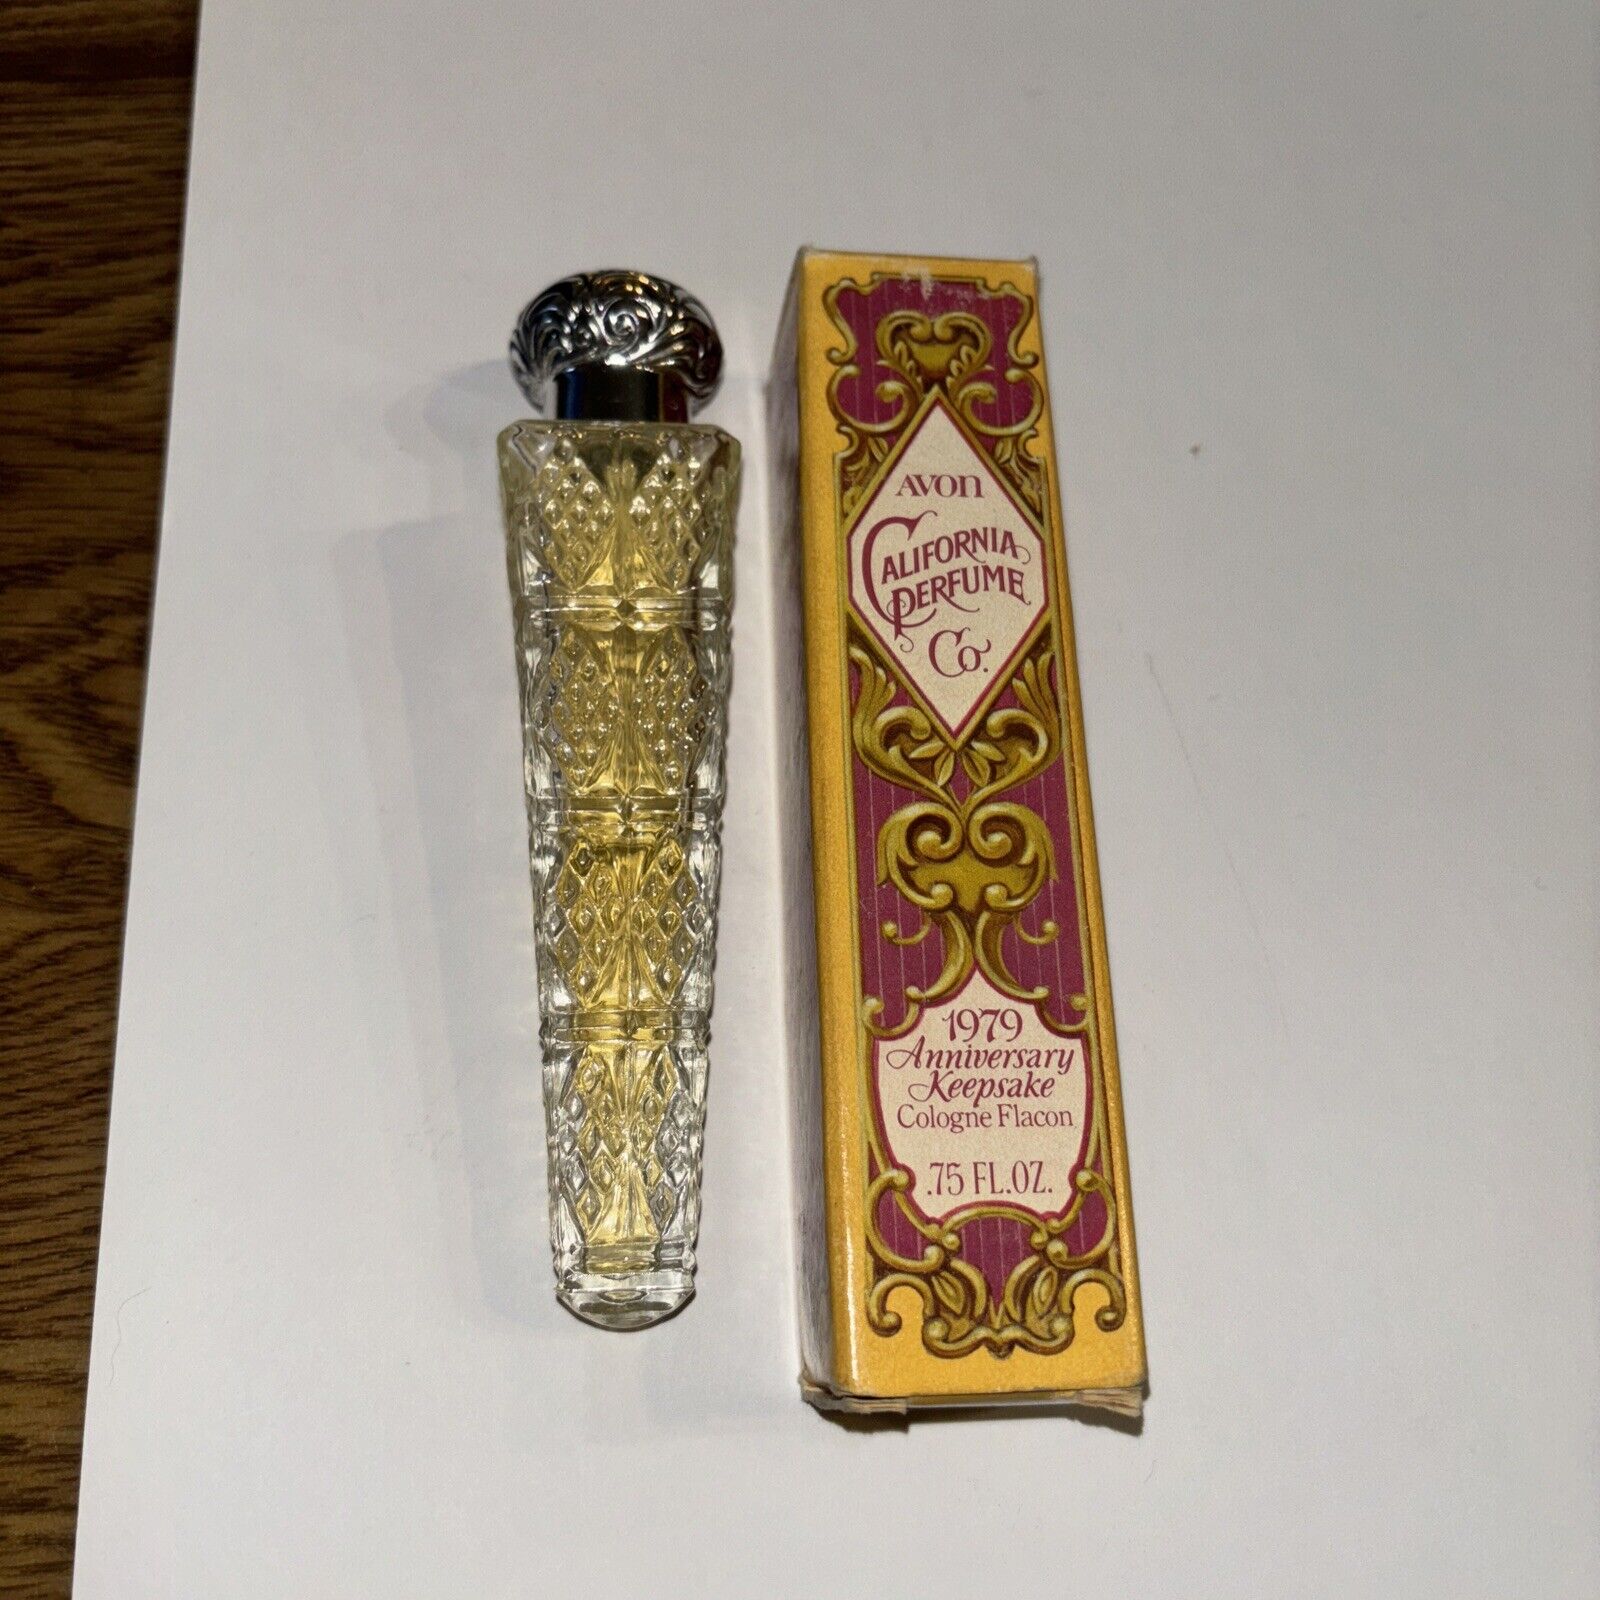 Avon California Perfume Co 1979 Anniversary Keepsake bottle with orig box